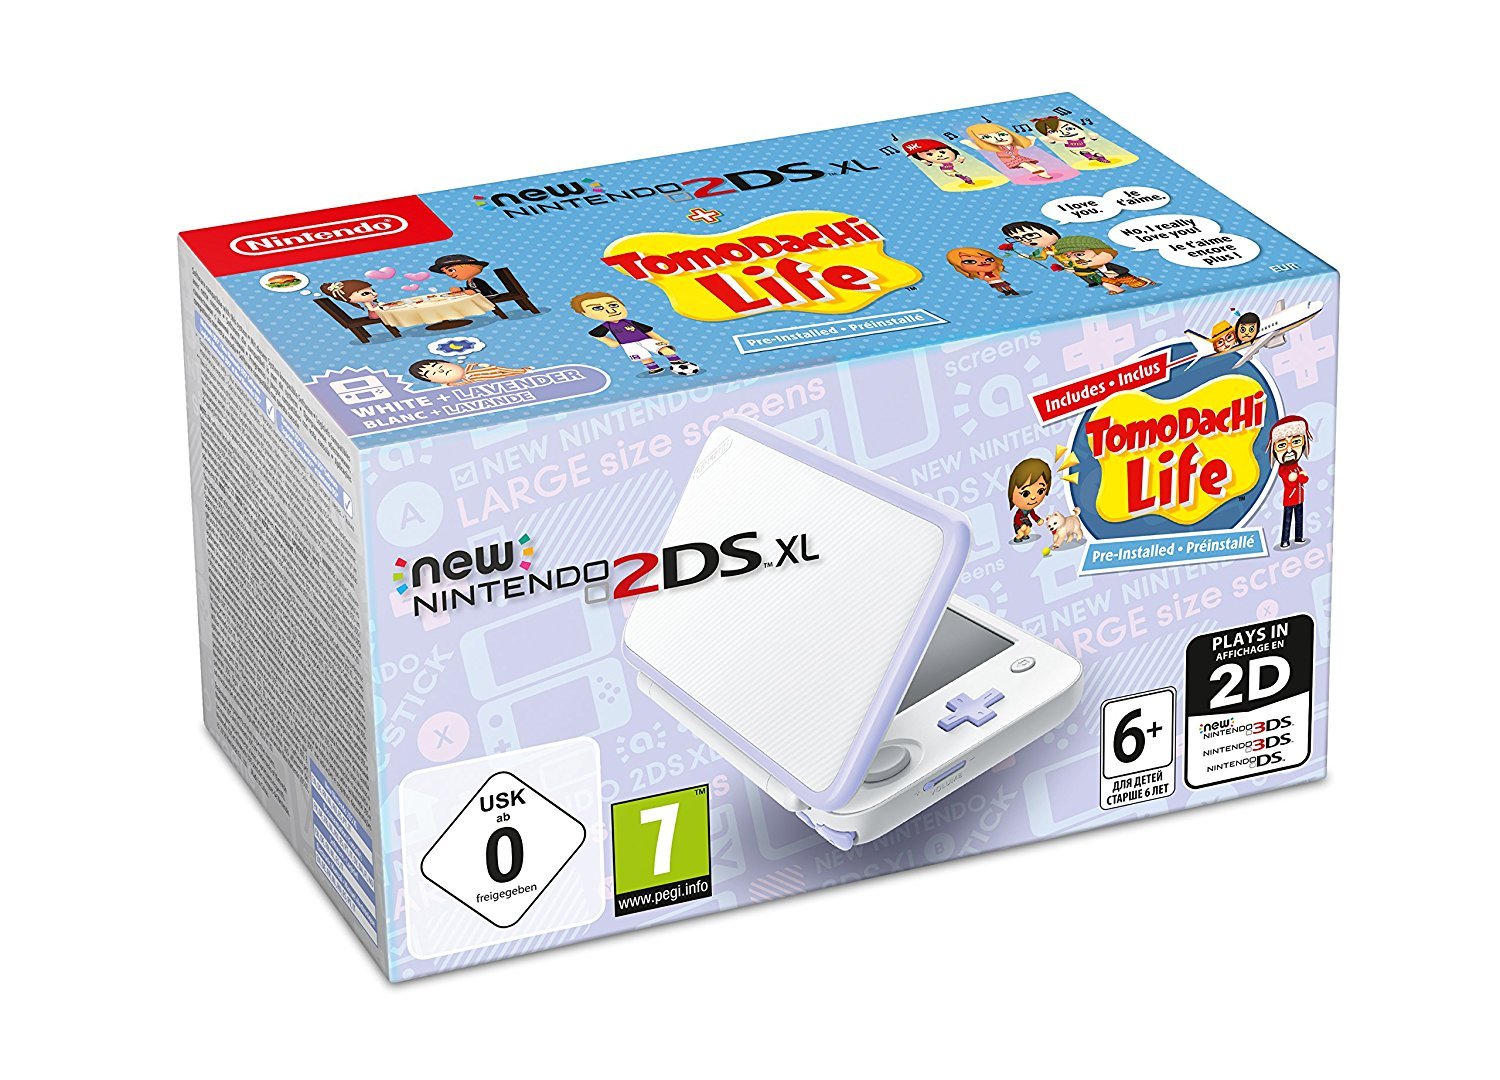 New Nintendo 2DS XL White + Lavender + Life